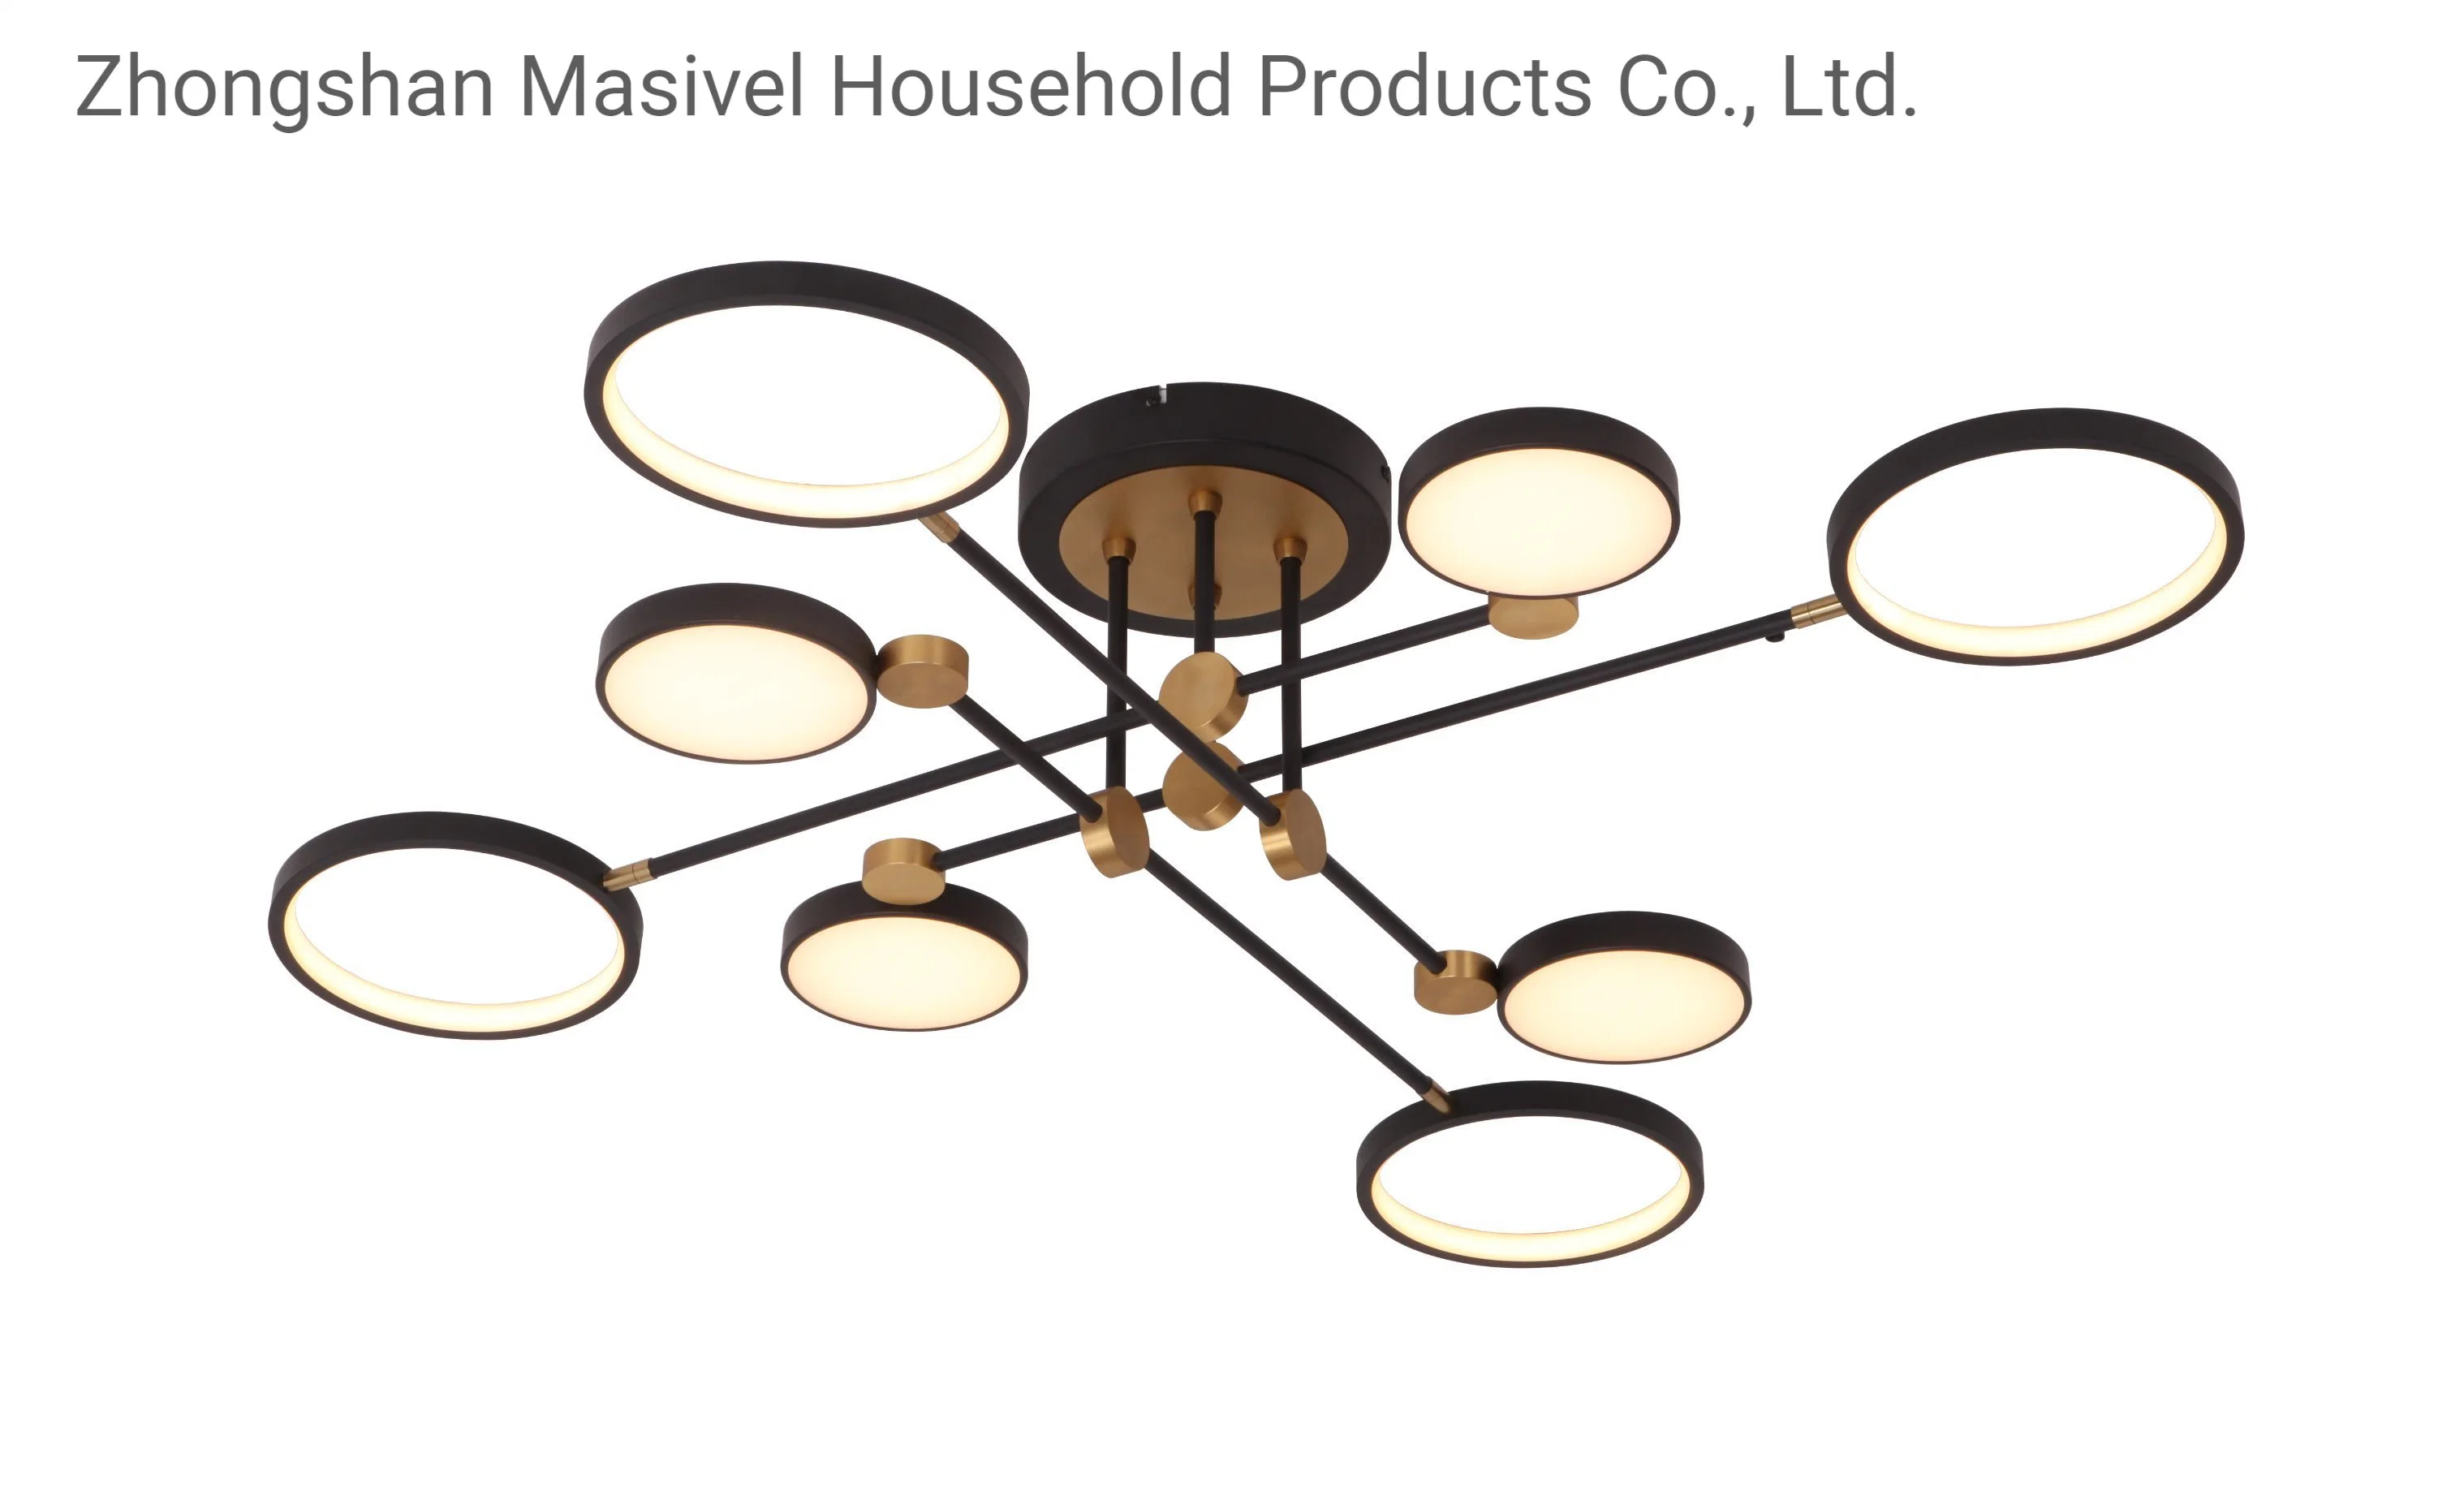 Masivel 8-Head Design LED-Leuchte Moderne Nordic Indoor Deckenleuchte